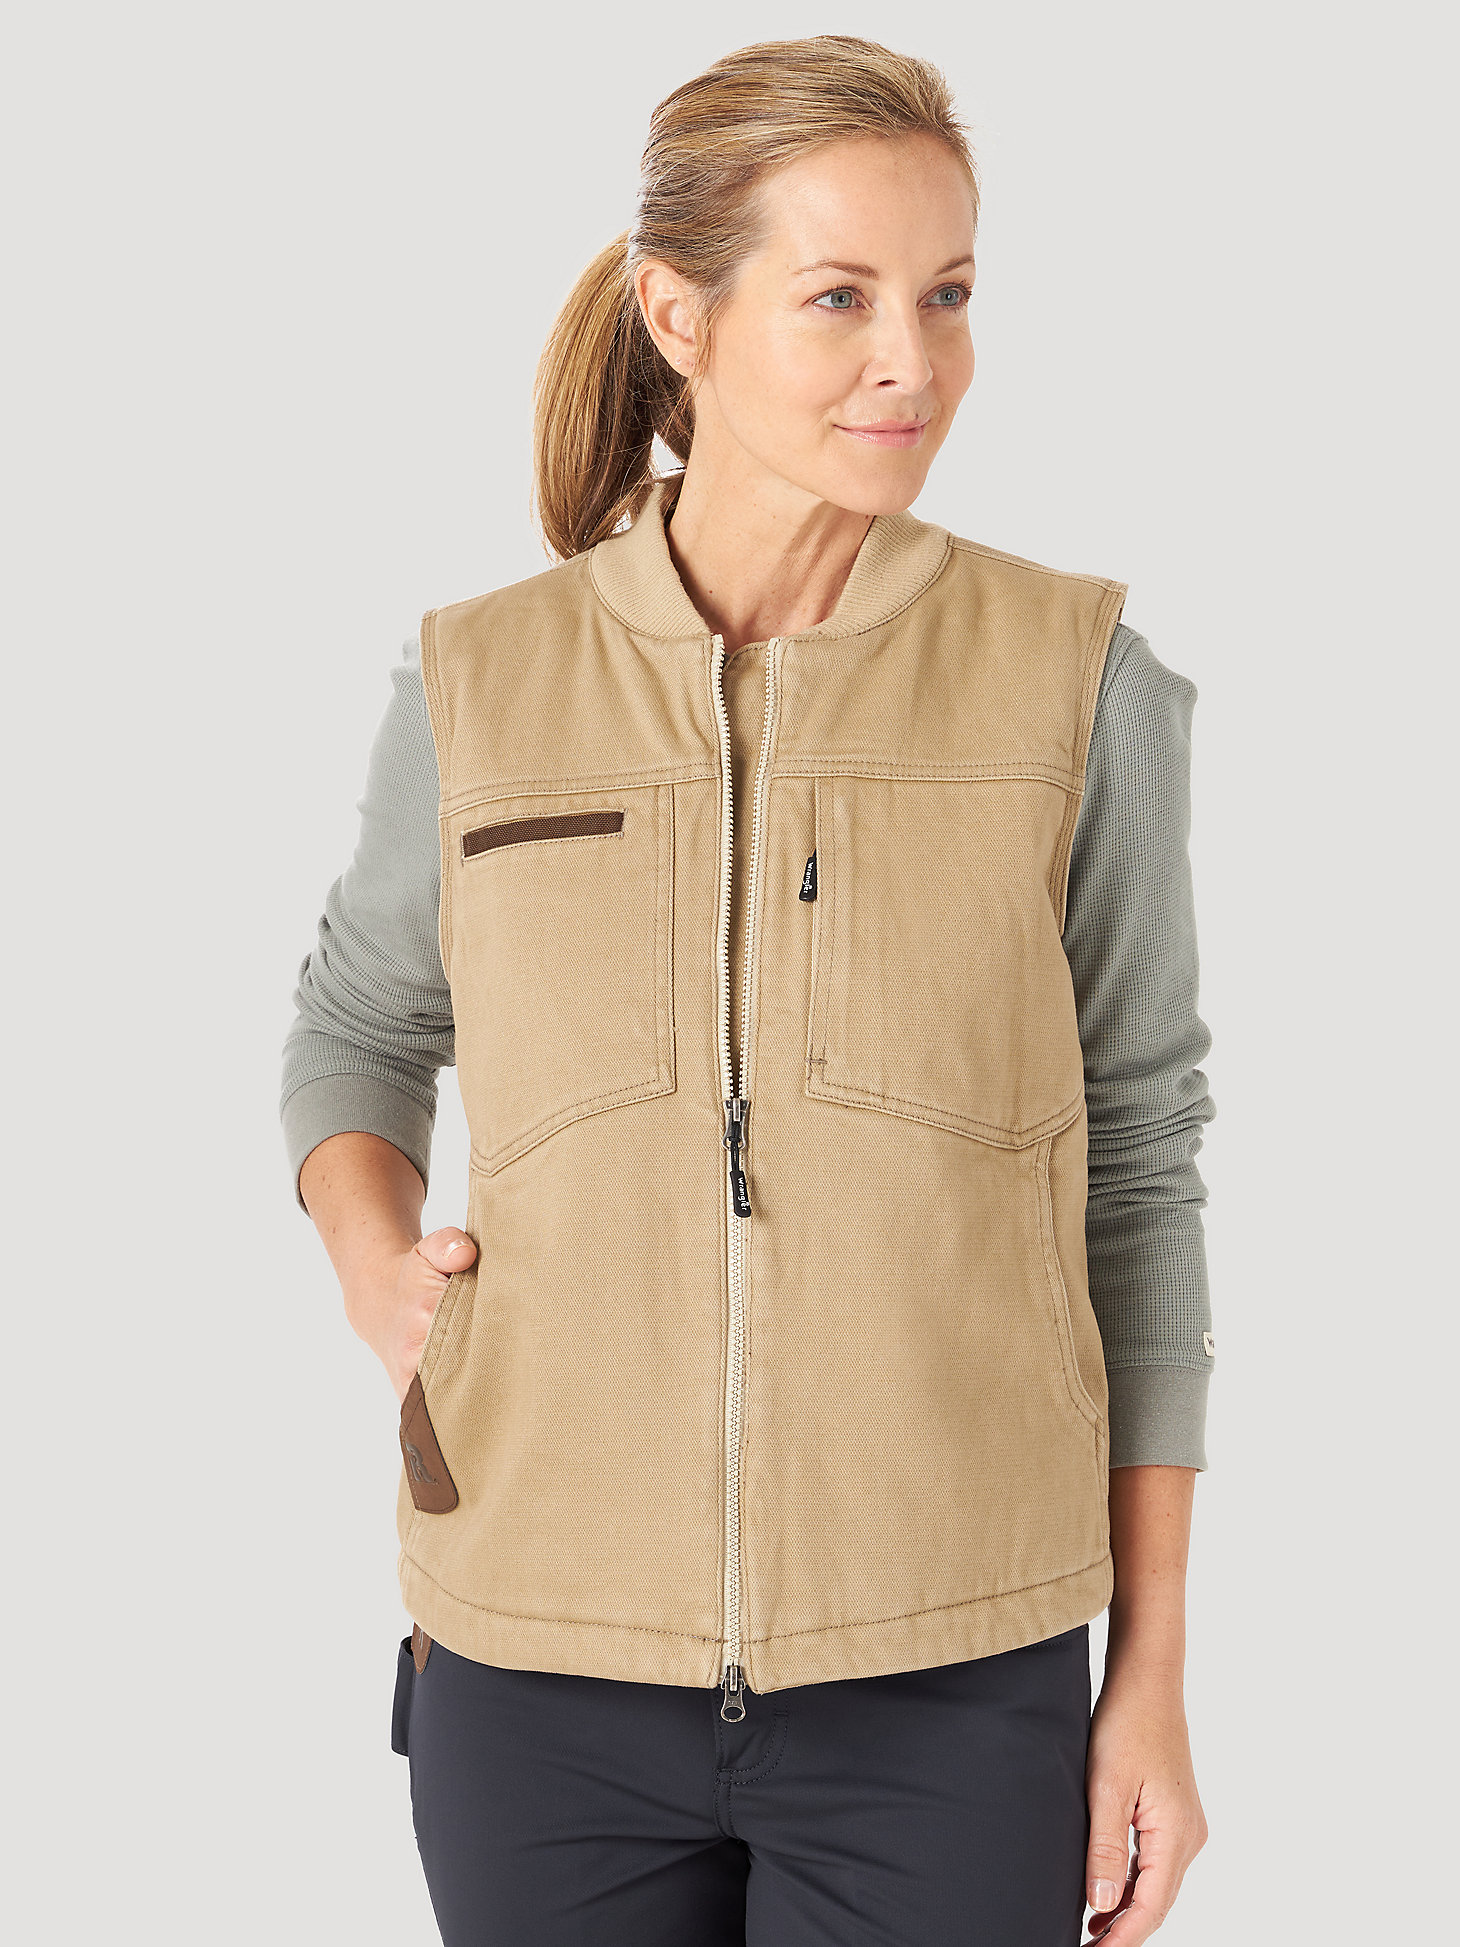 Women's Wrangler® RIGGS Workwear® Tough Layers Insulated Work Vest in Golden Khaki alternative view 5